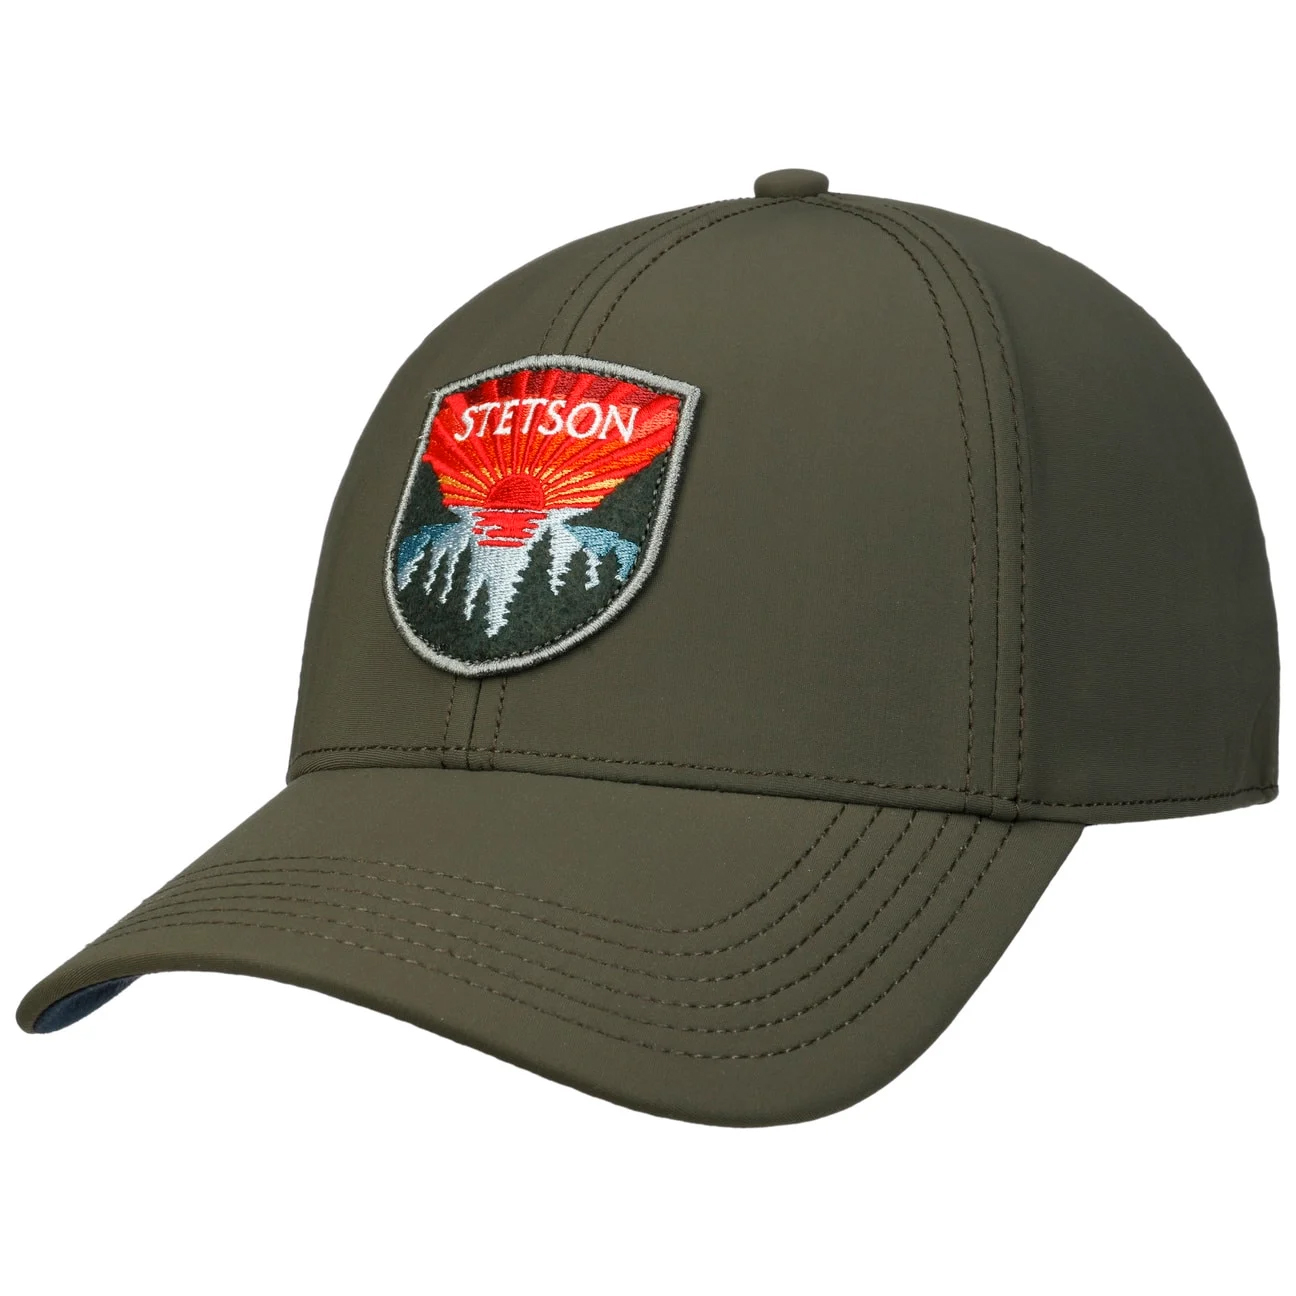 Stetson - Sunset Cap - Olive